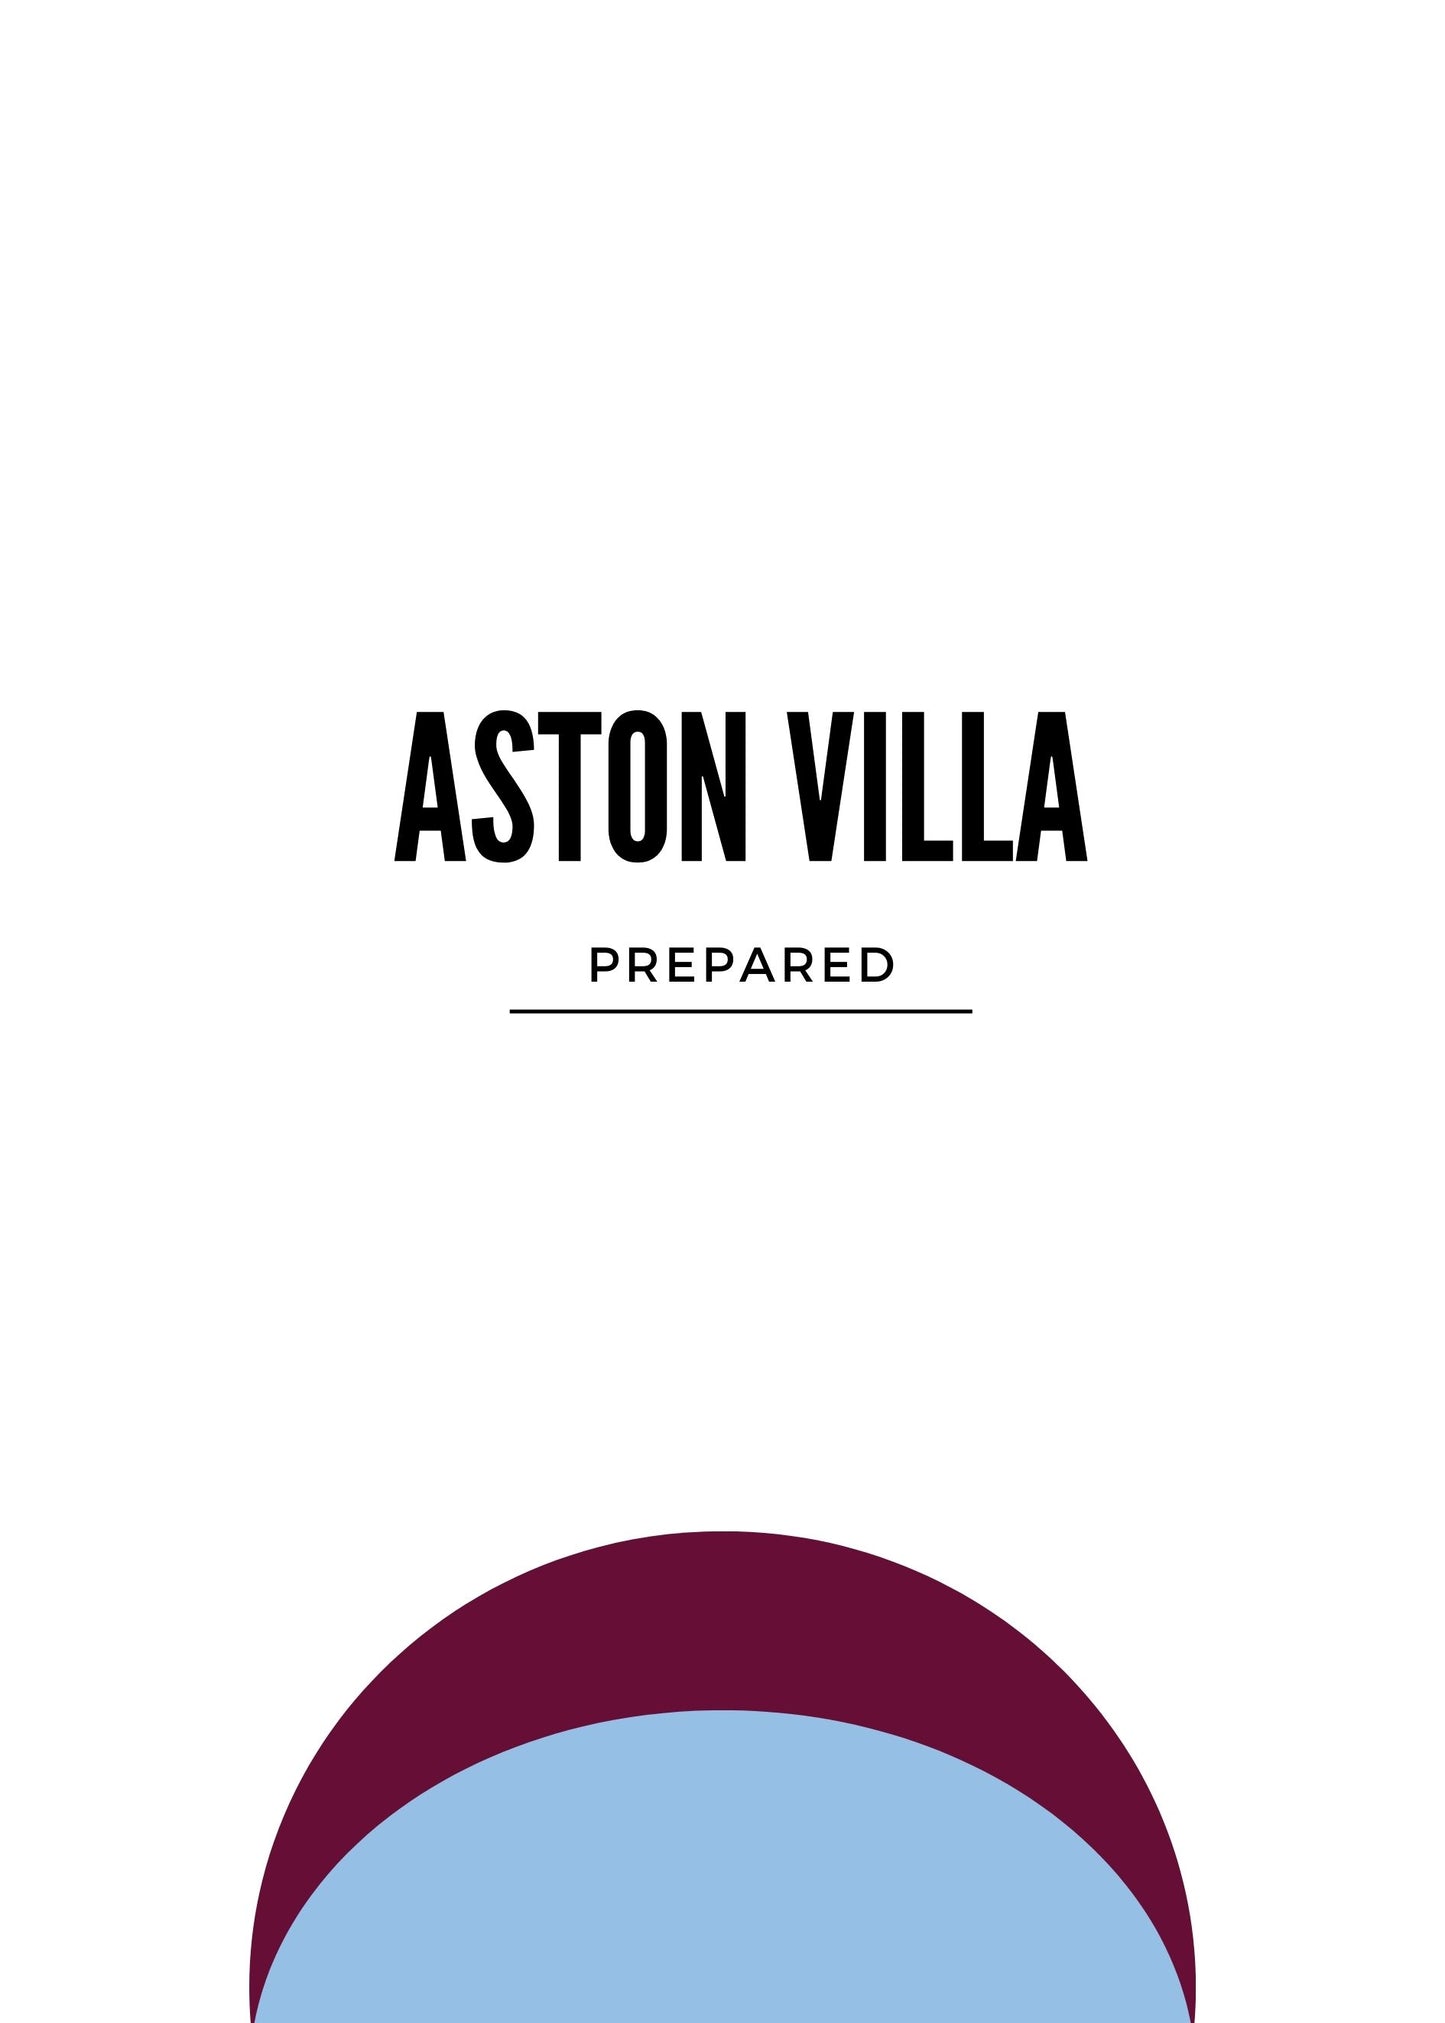 Aston Vills poster